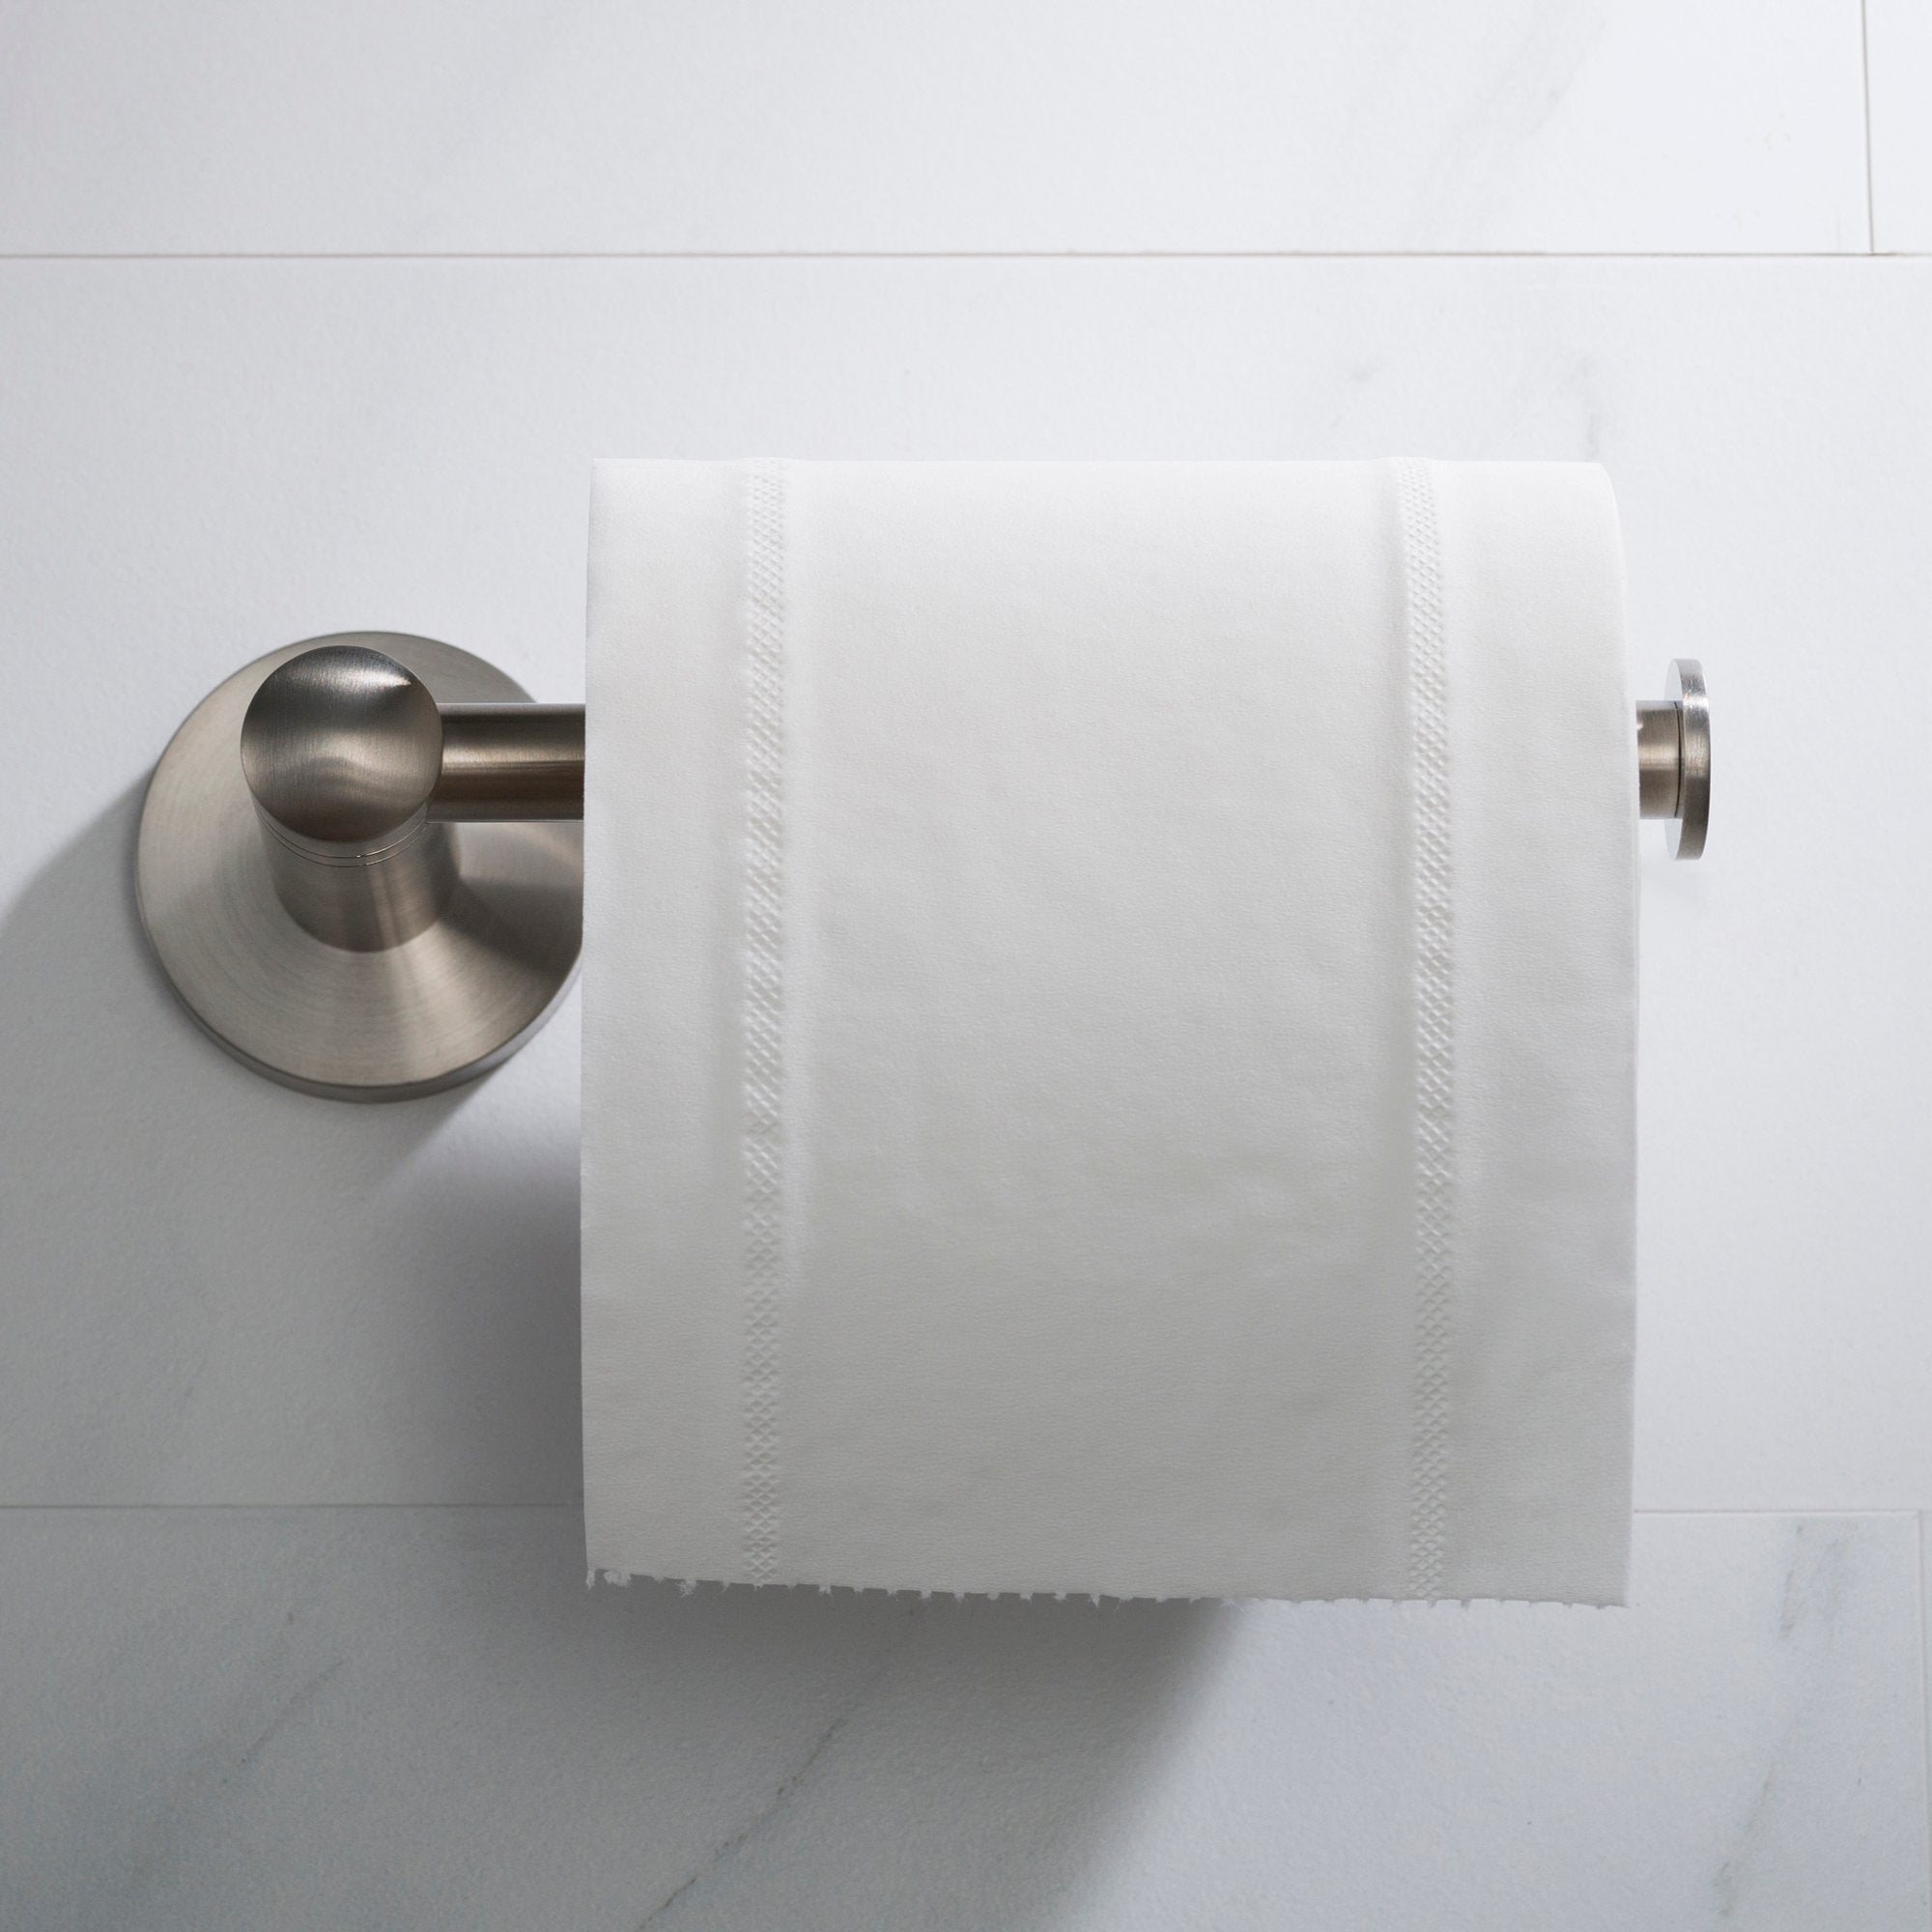 Bathroom Toilet Paper Holder